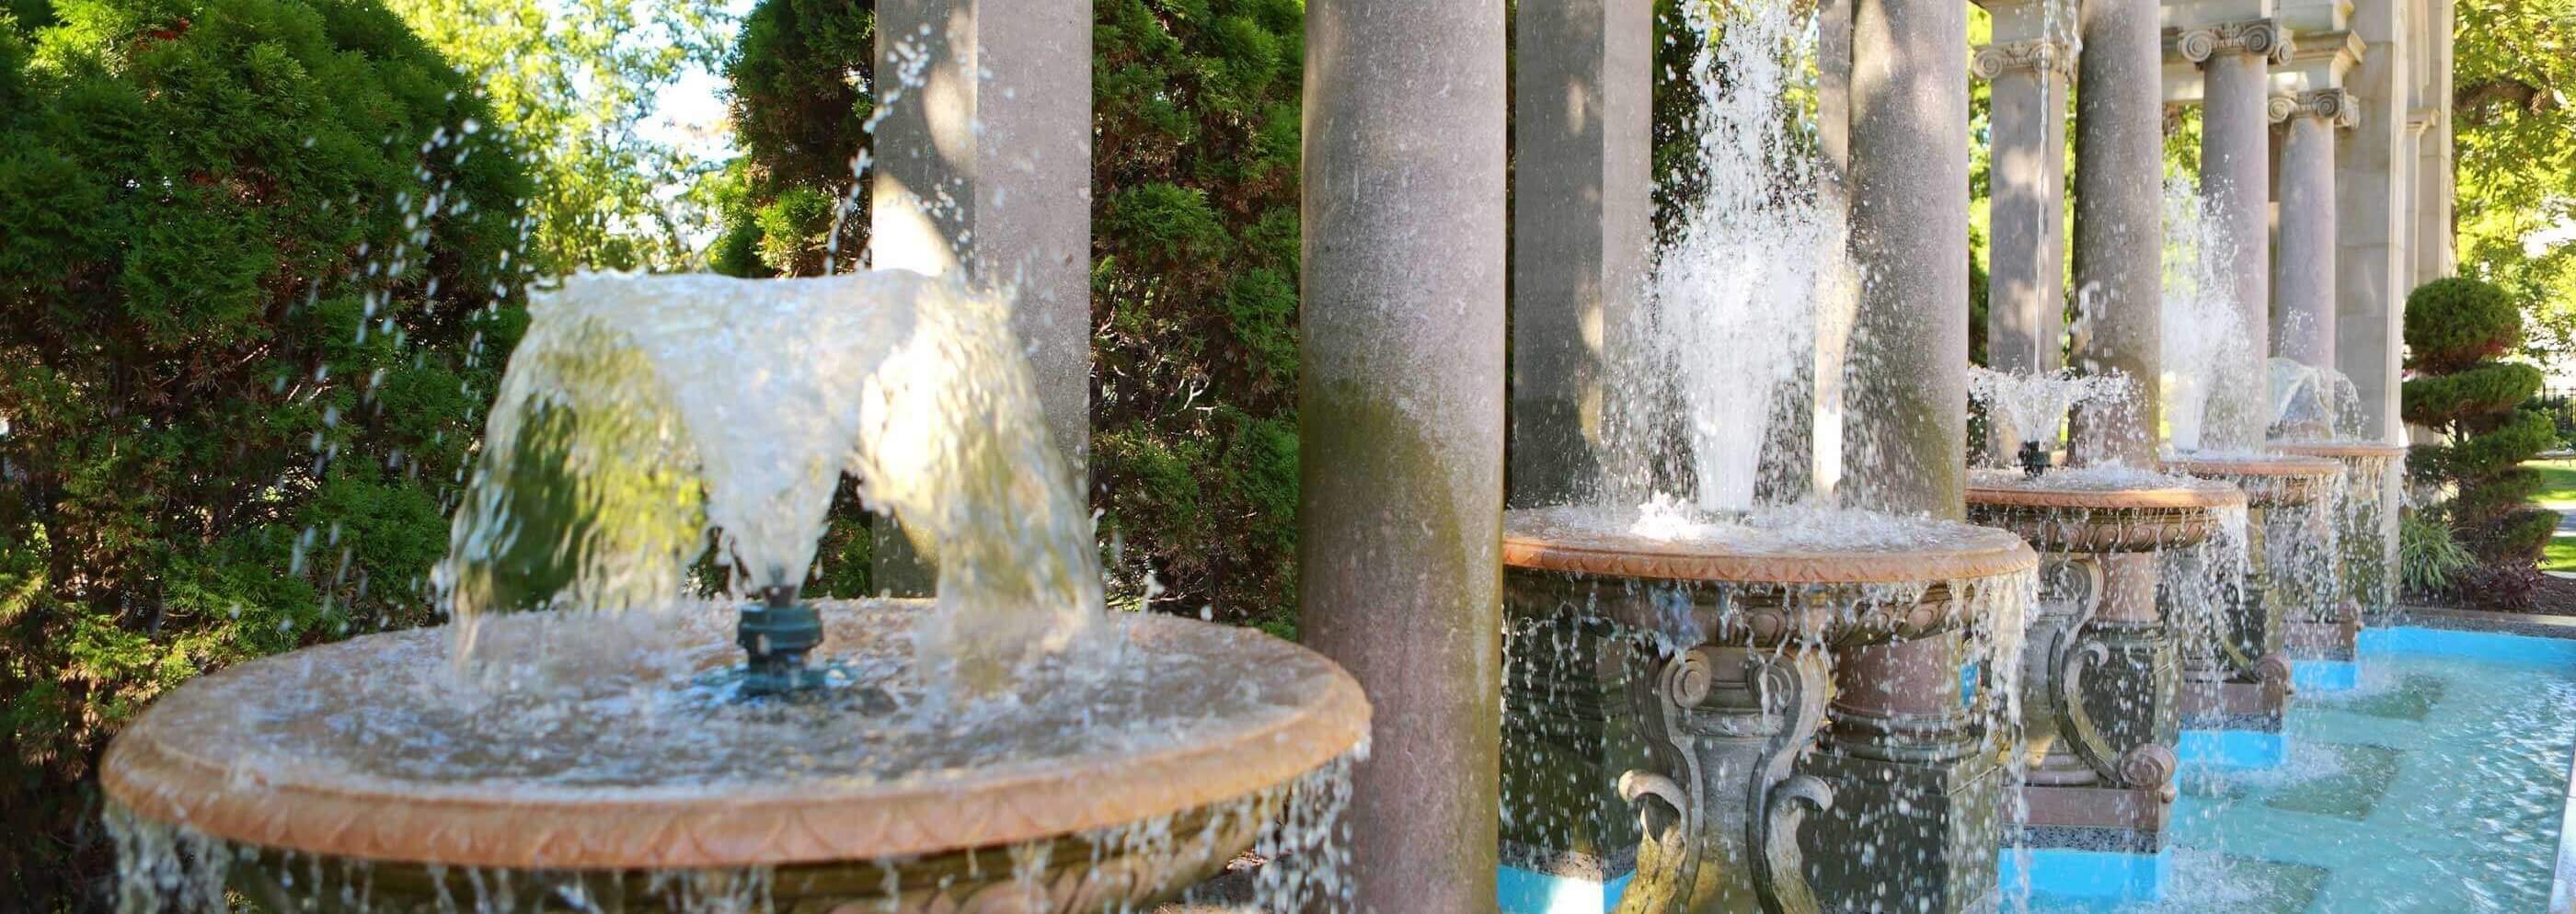 Fountains of Erlanger Garden